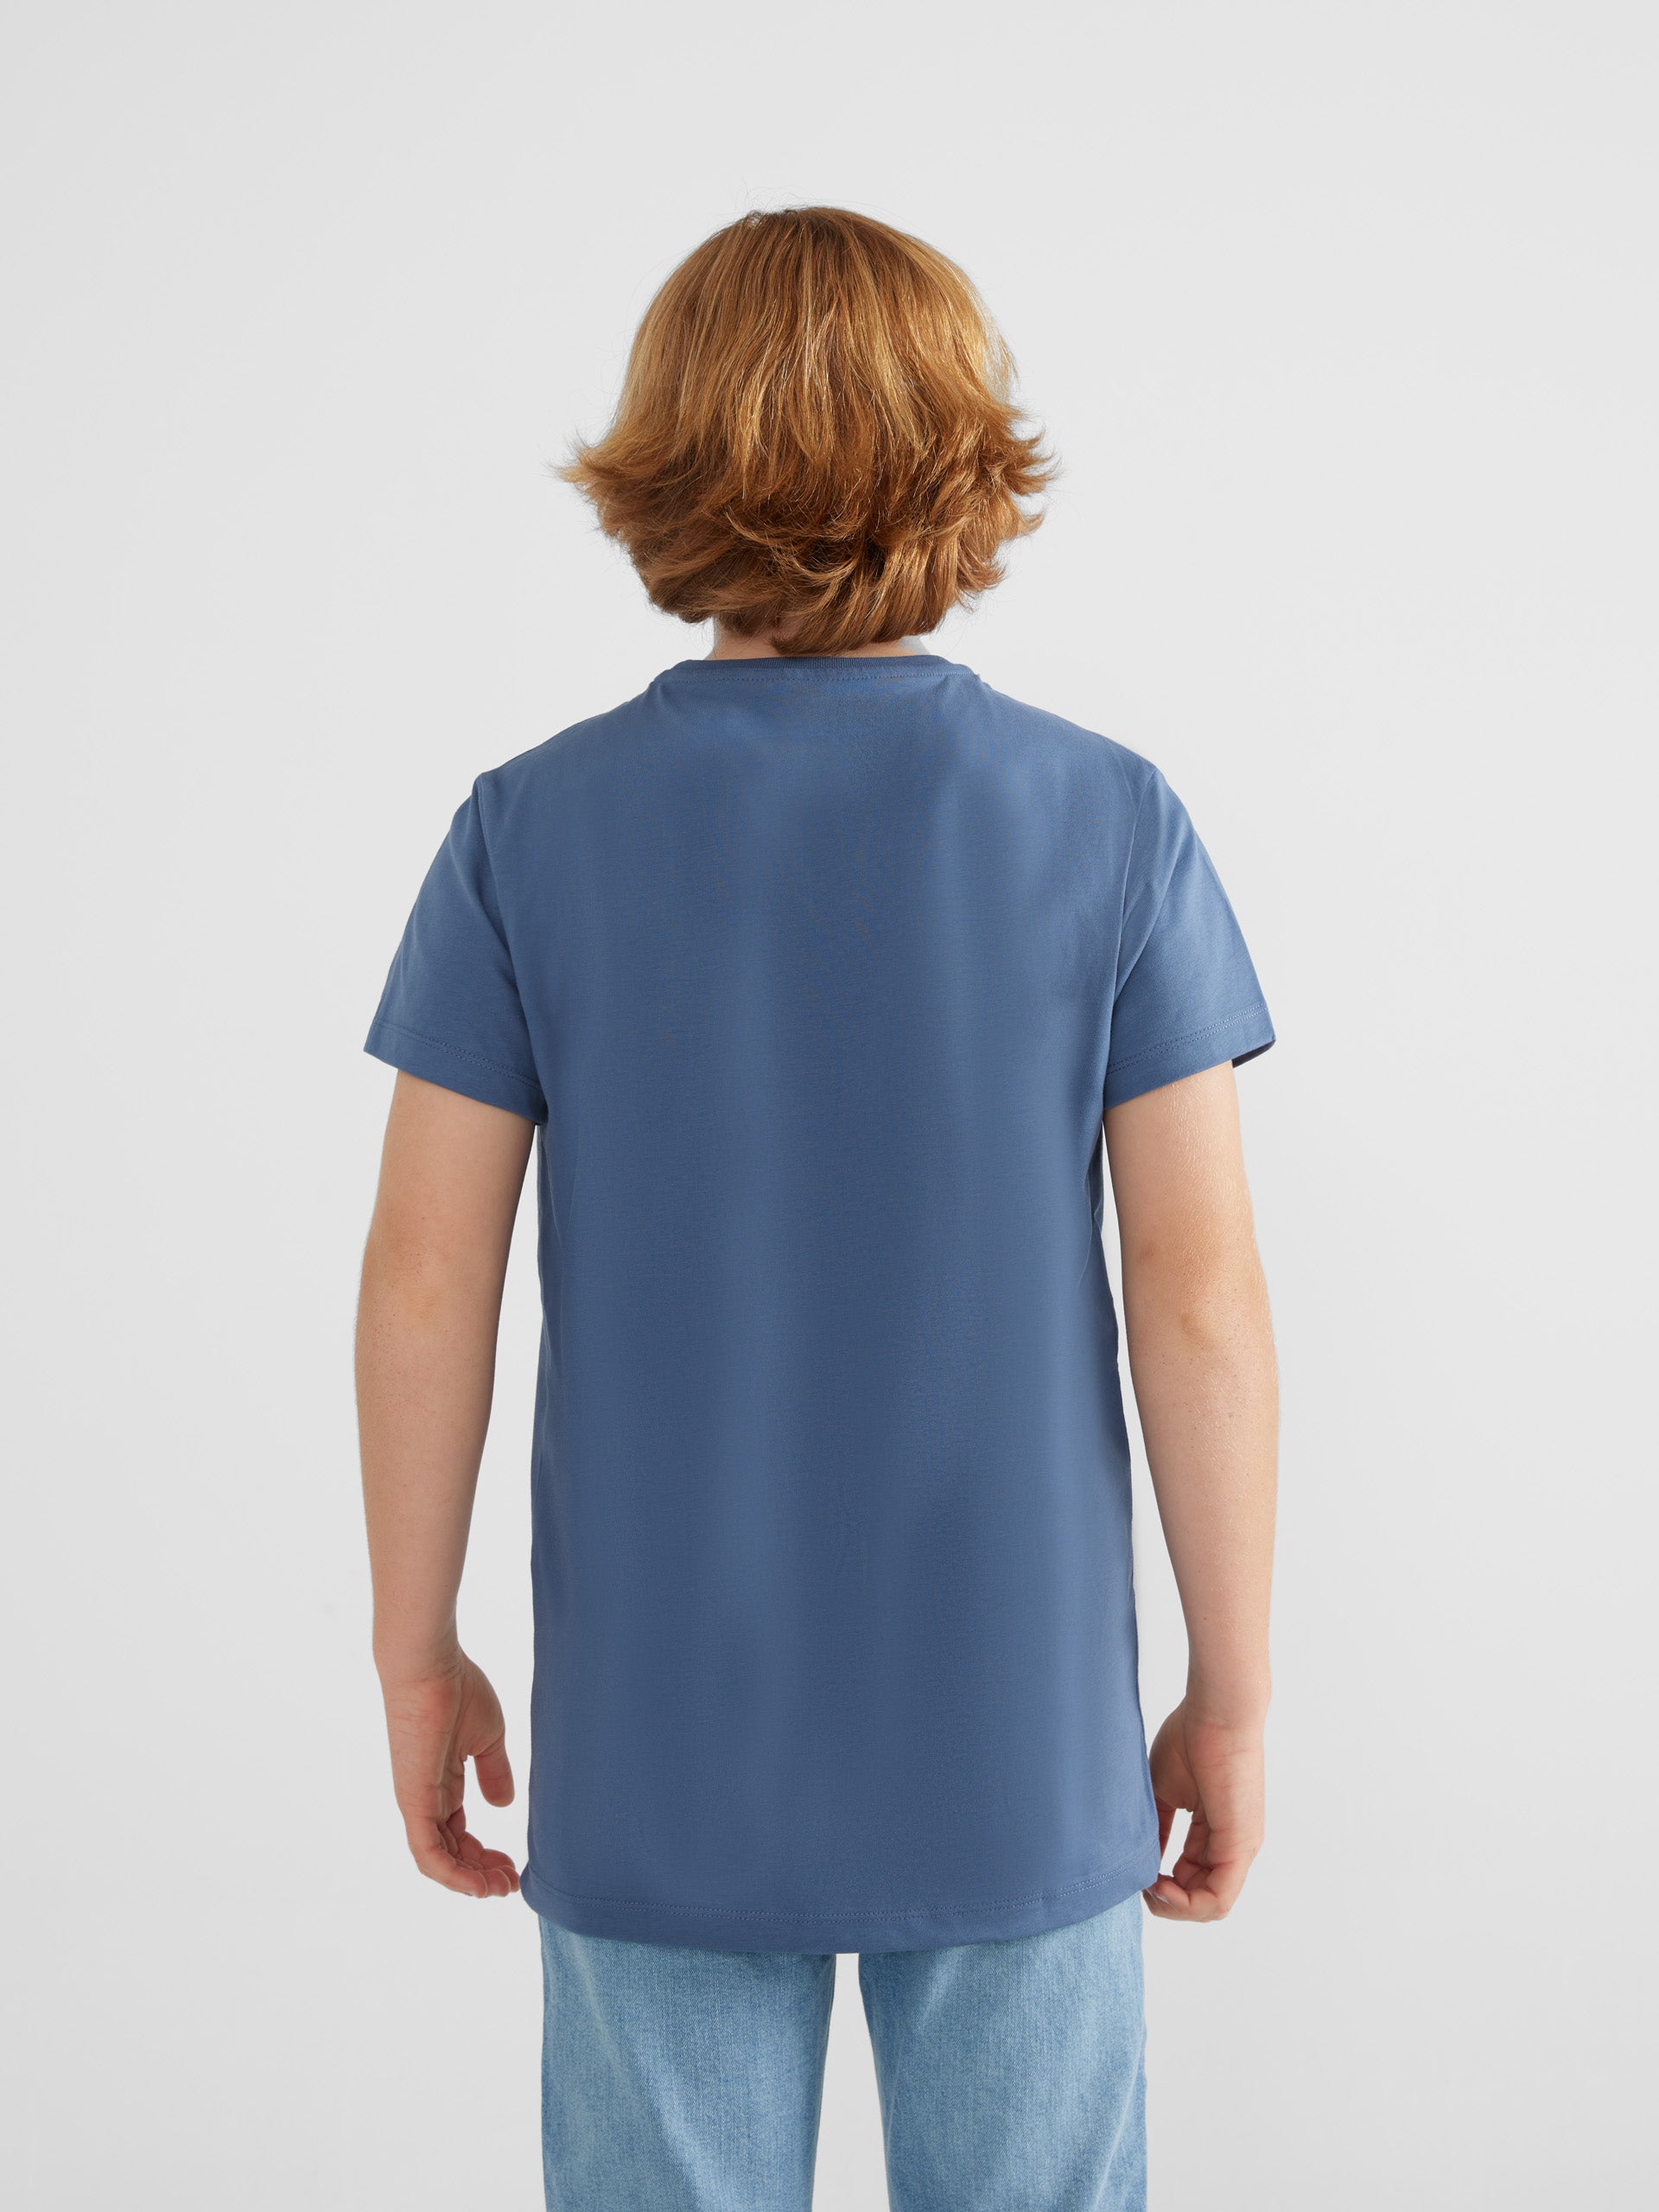 T-shirt enfant entreprise pixel bleu